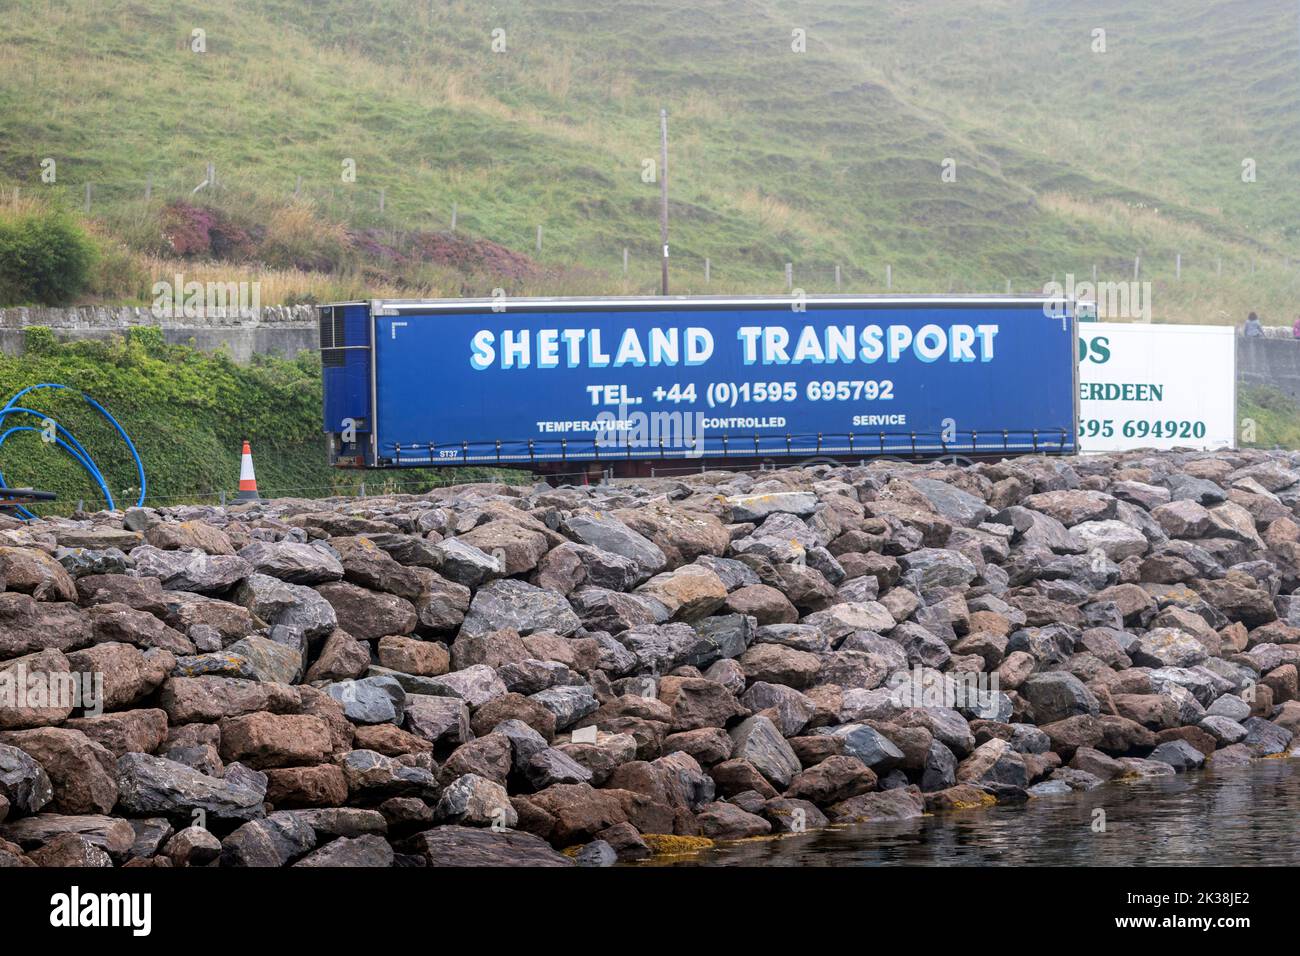 La carga del transporte de Shetland, Scrabster, la bahía de Thurso, Caithness, Escocia, REINO UNIDO Foto de stock